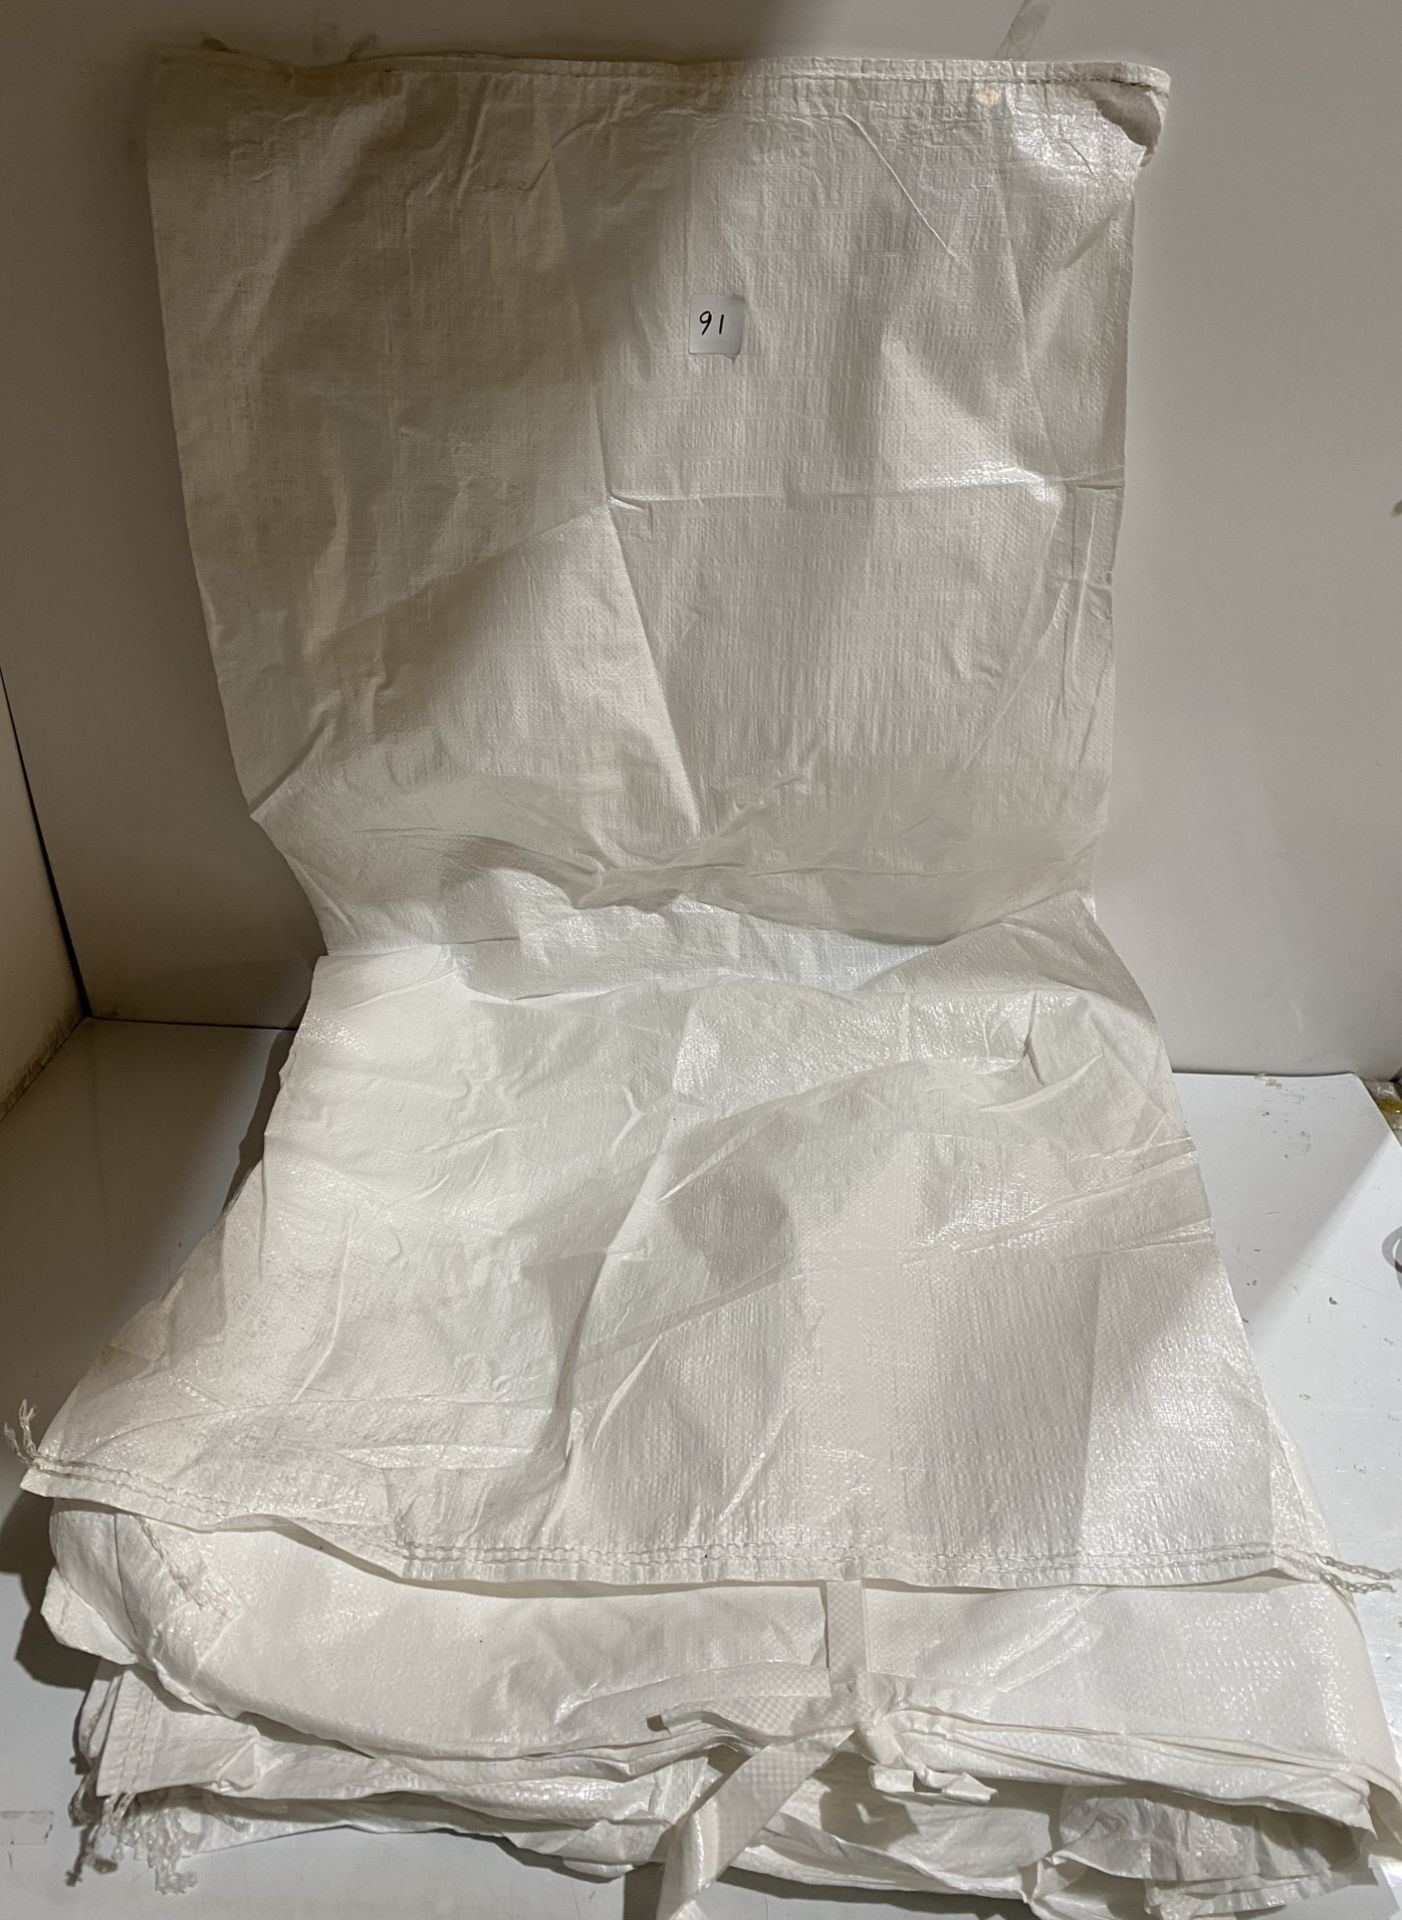 50 x white large woven polypropylene sacks heavy duty - ideal for garden waste rubble/sand/builders